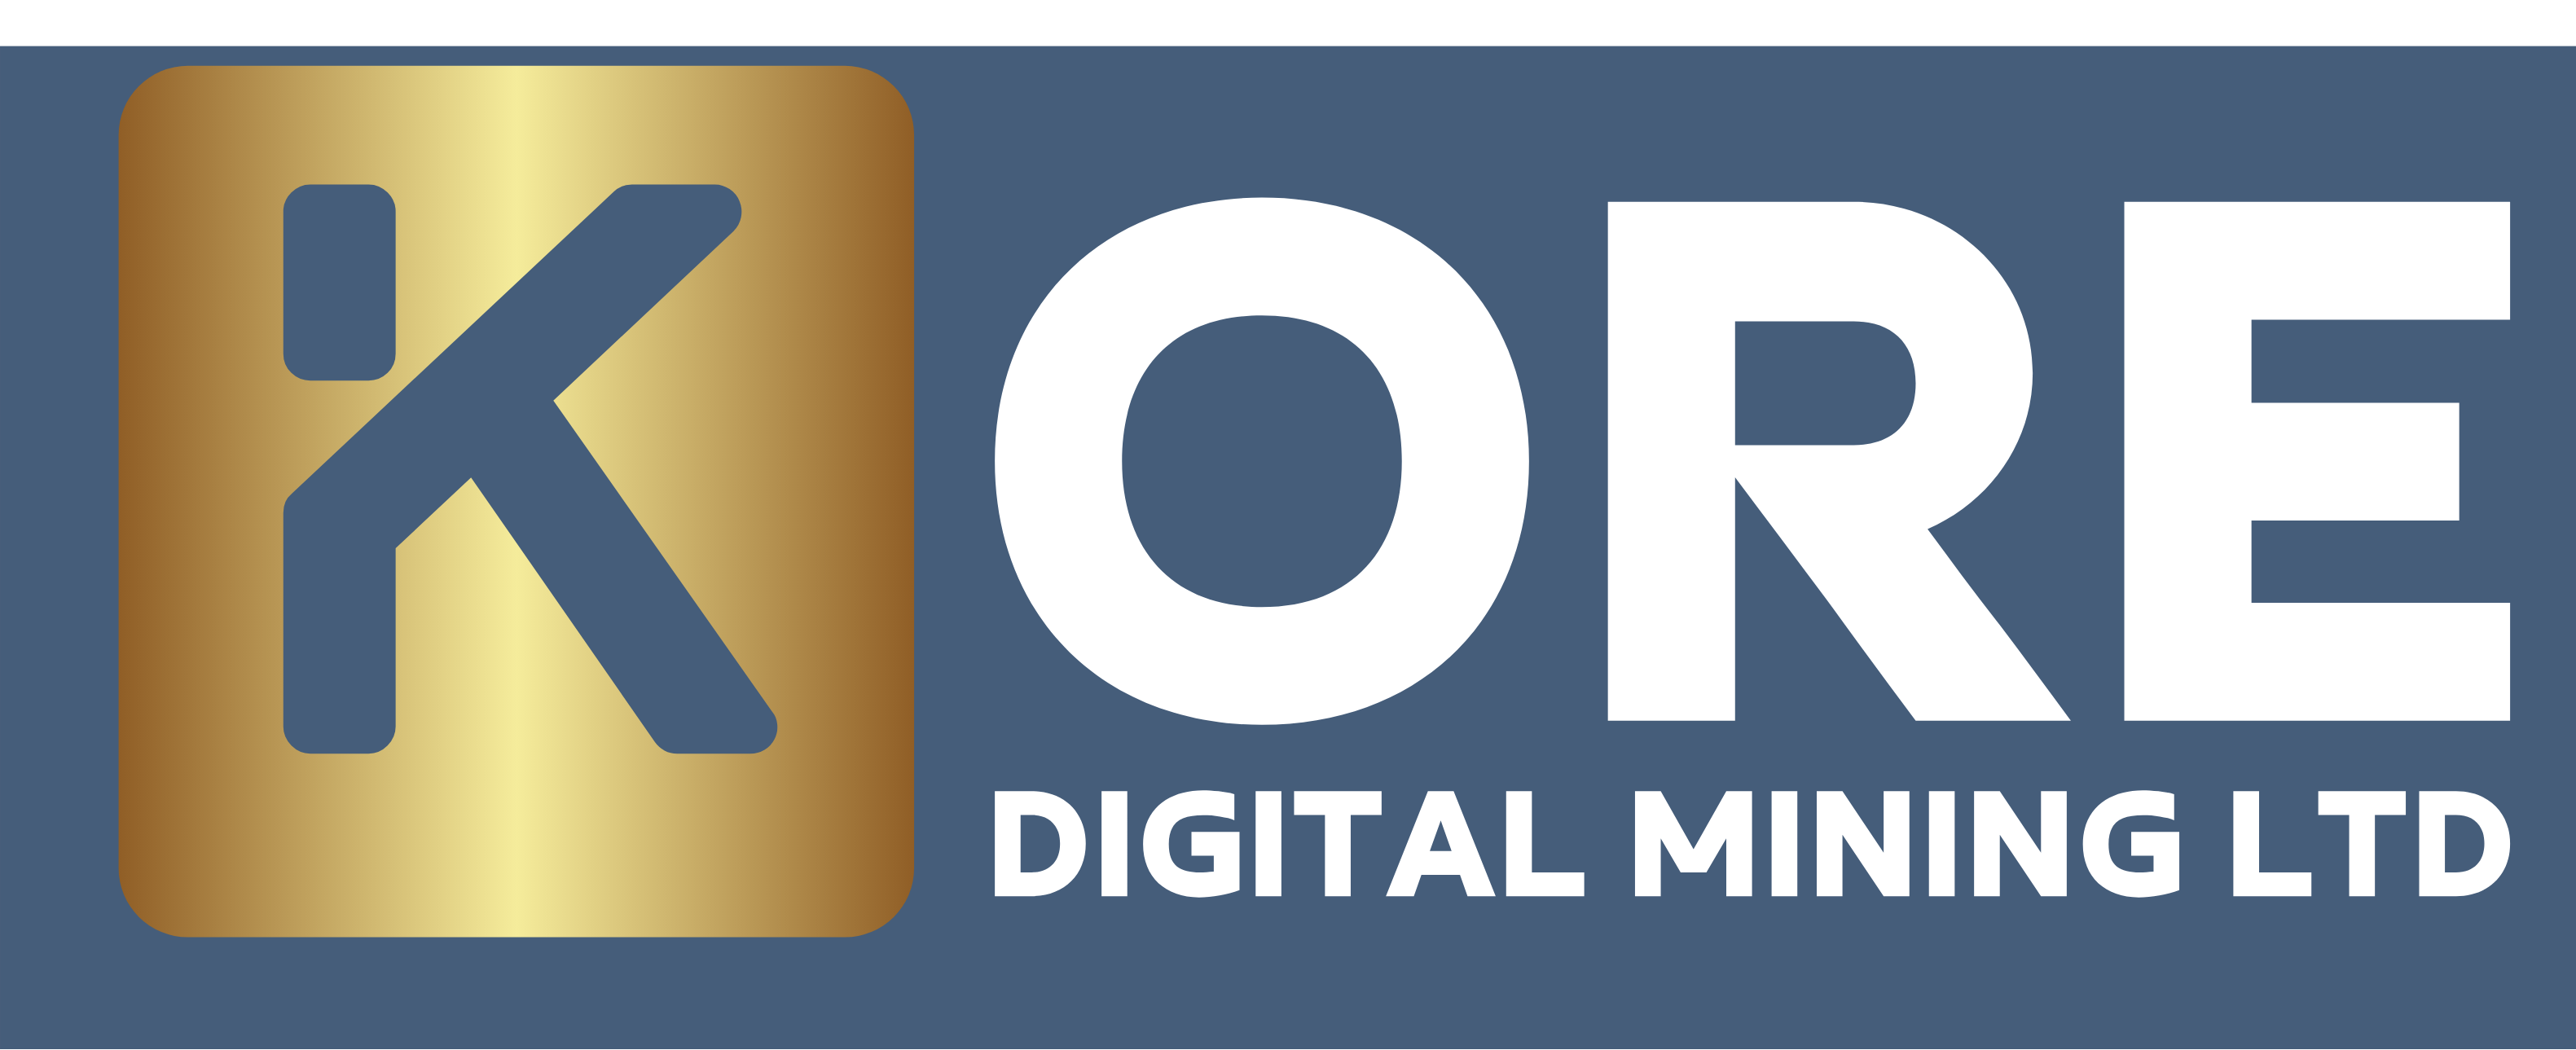 Kore Digital Mining Ltd - Dedicated UK based Bitcoin Miner